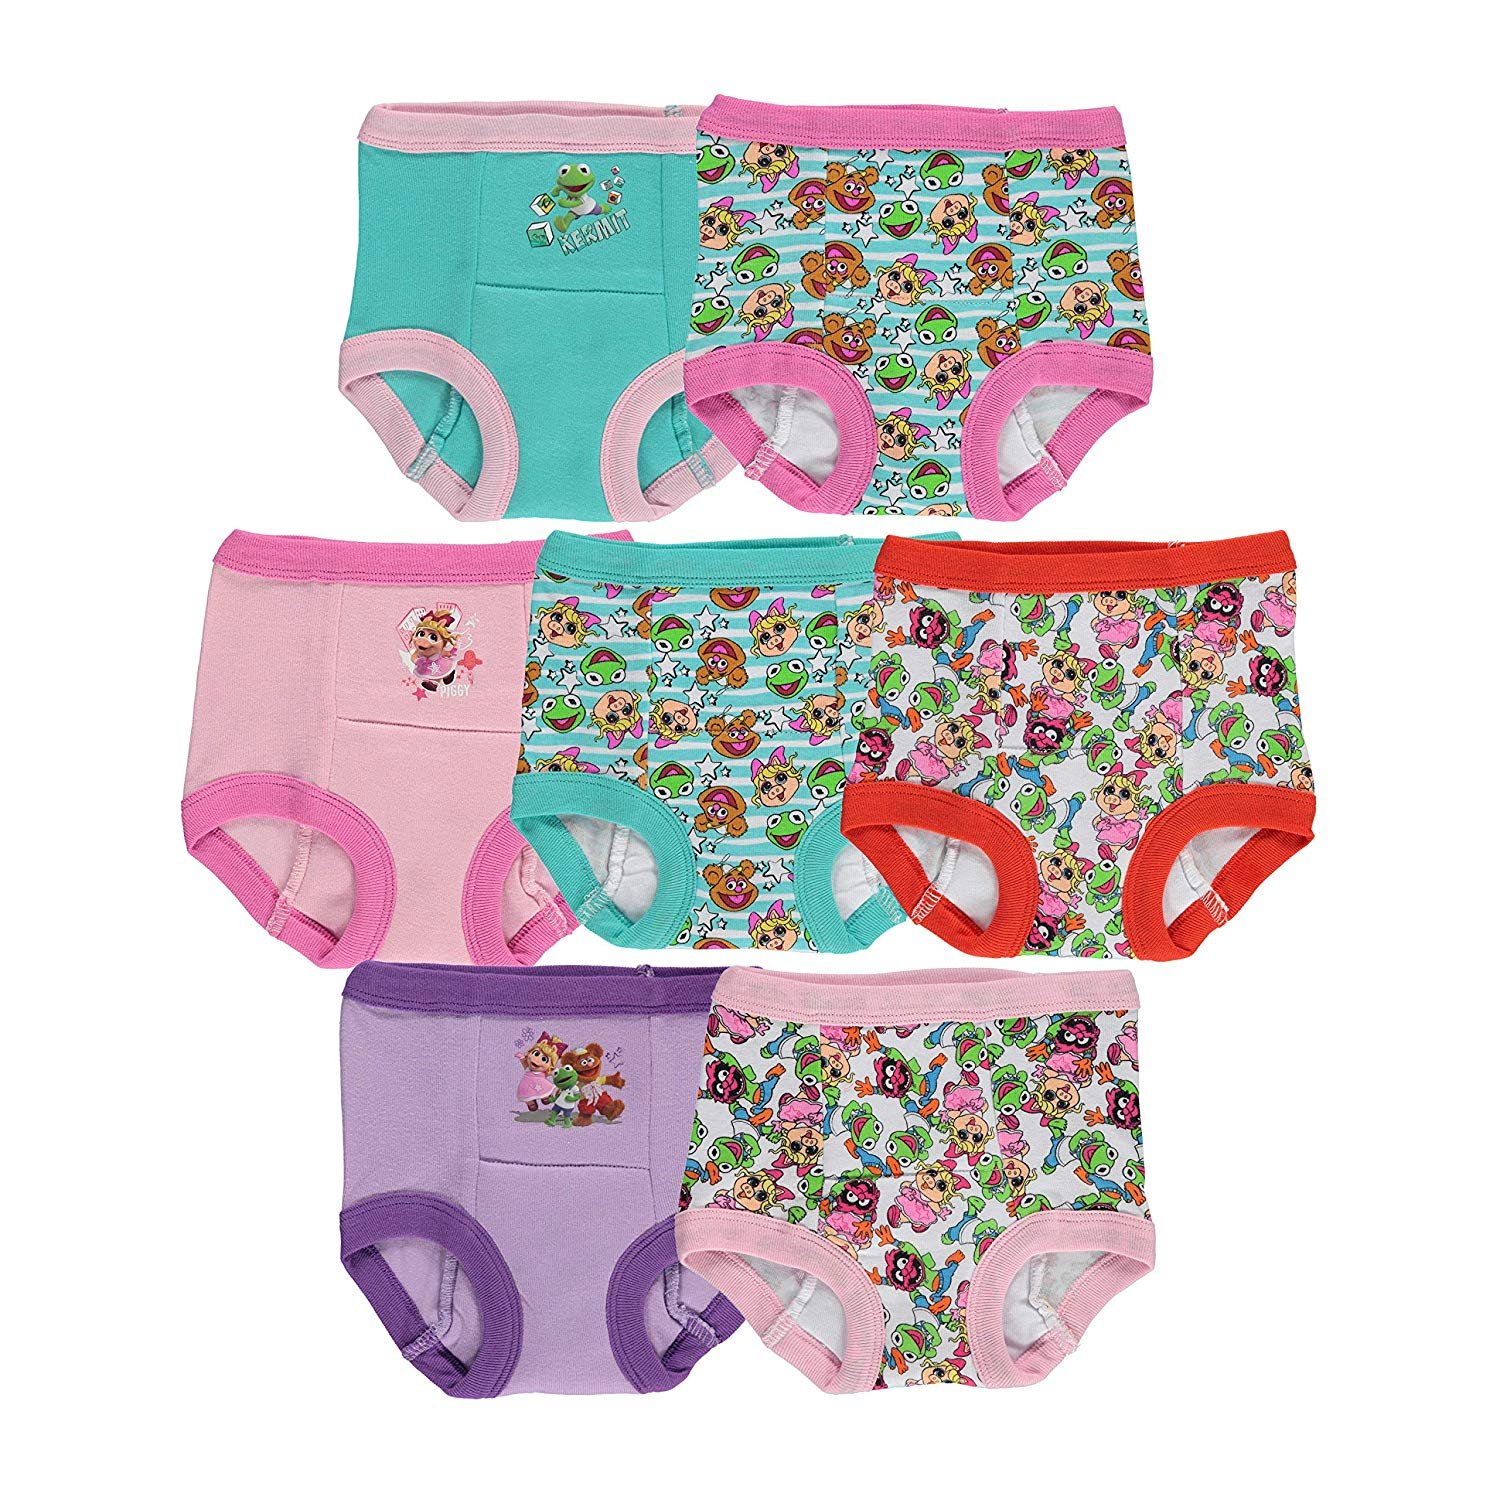 Muppet Babies Girls 7-Pack Training Pants Underwear Toddler Little